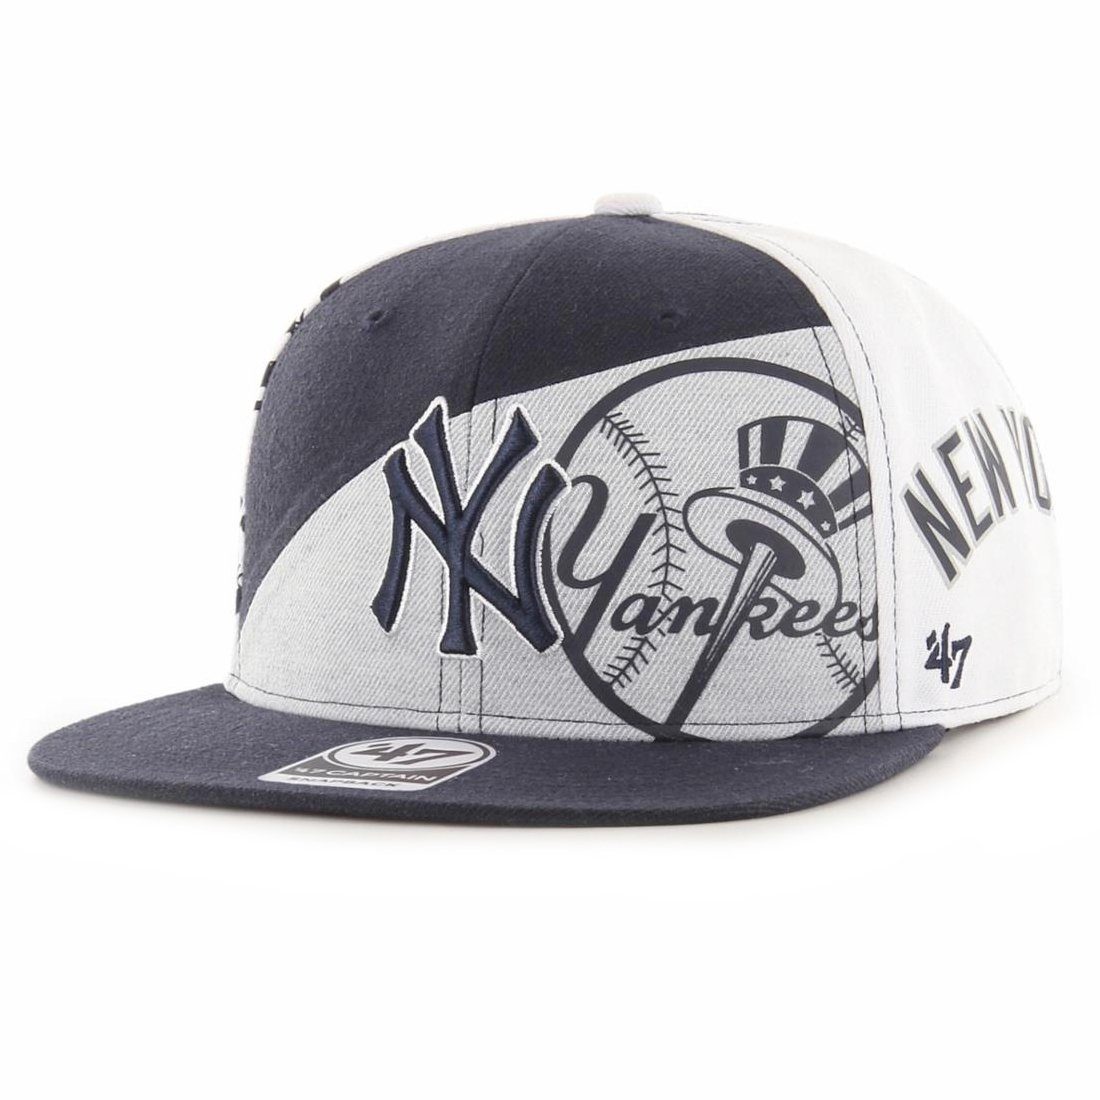 '47 Brand Snapback Cap PATCHWORK New York Yankees